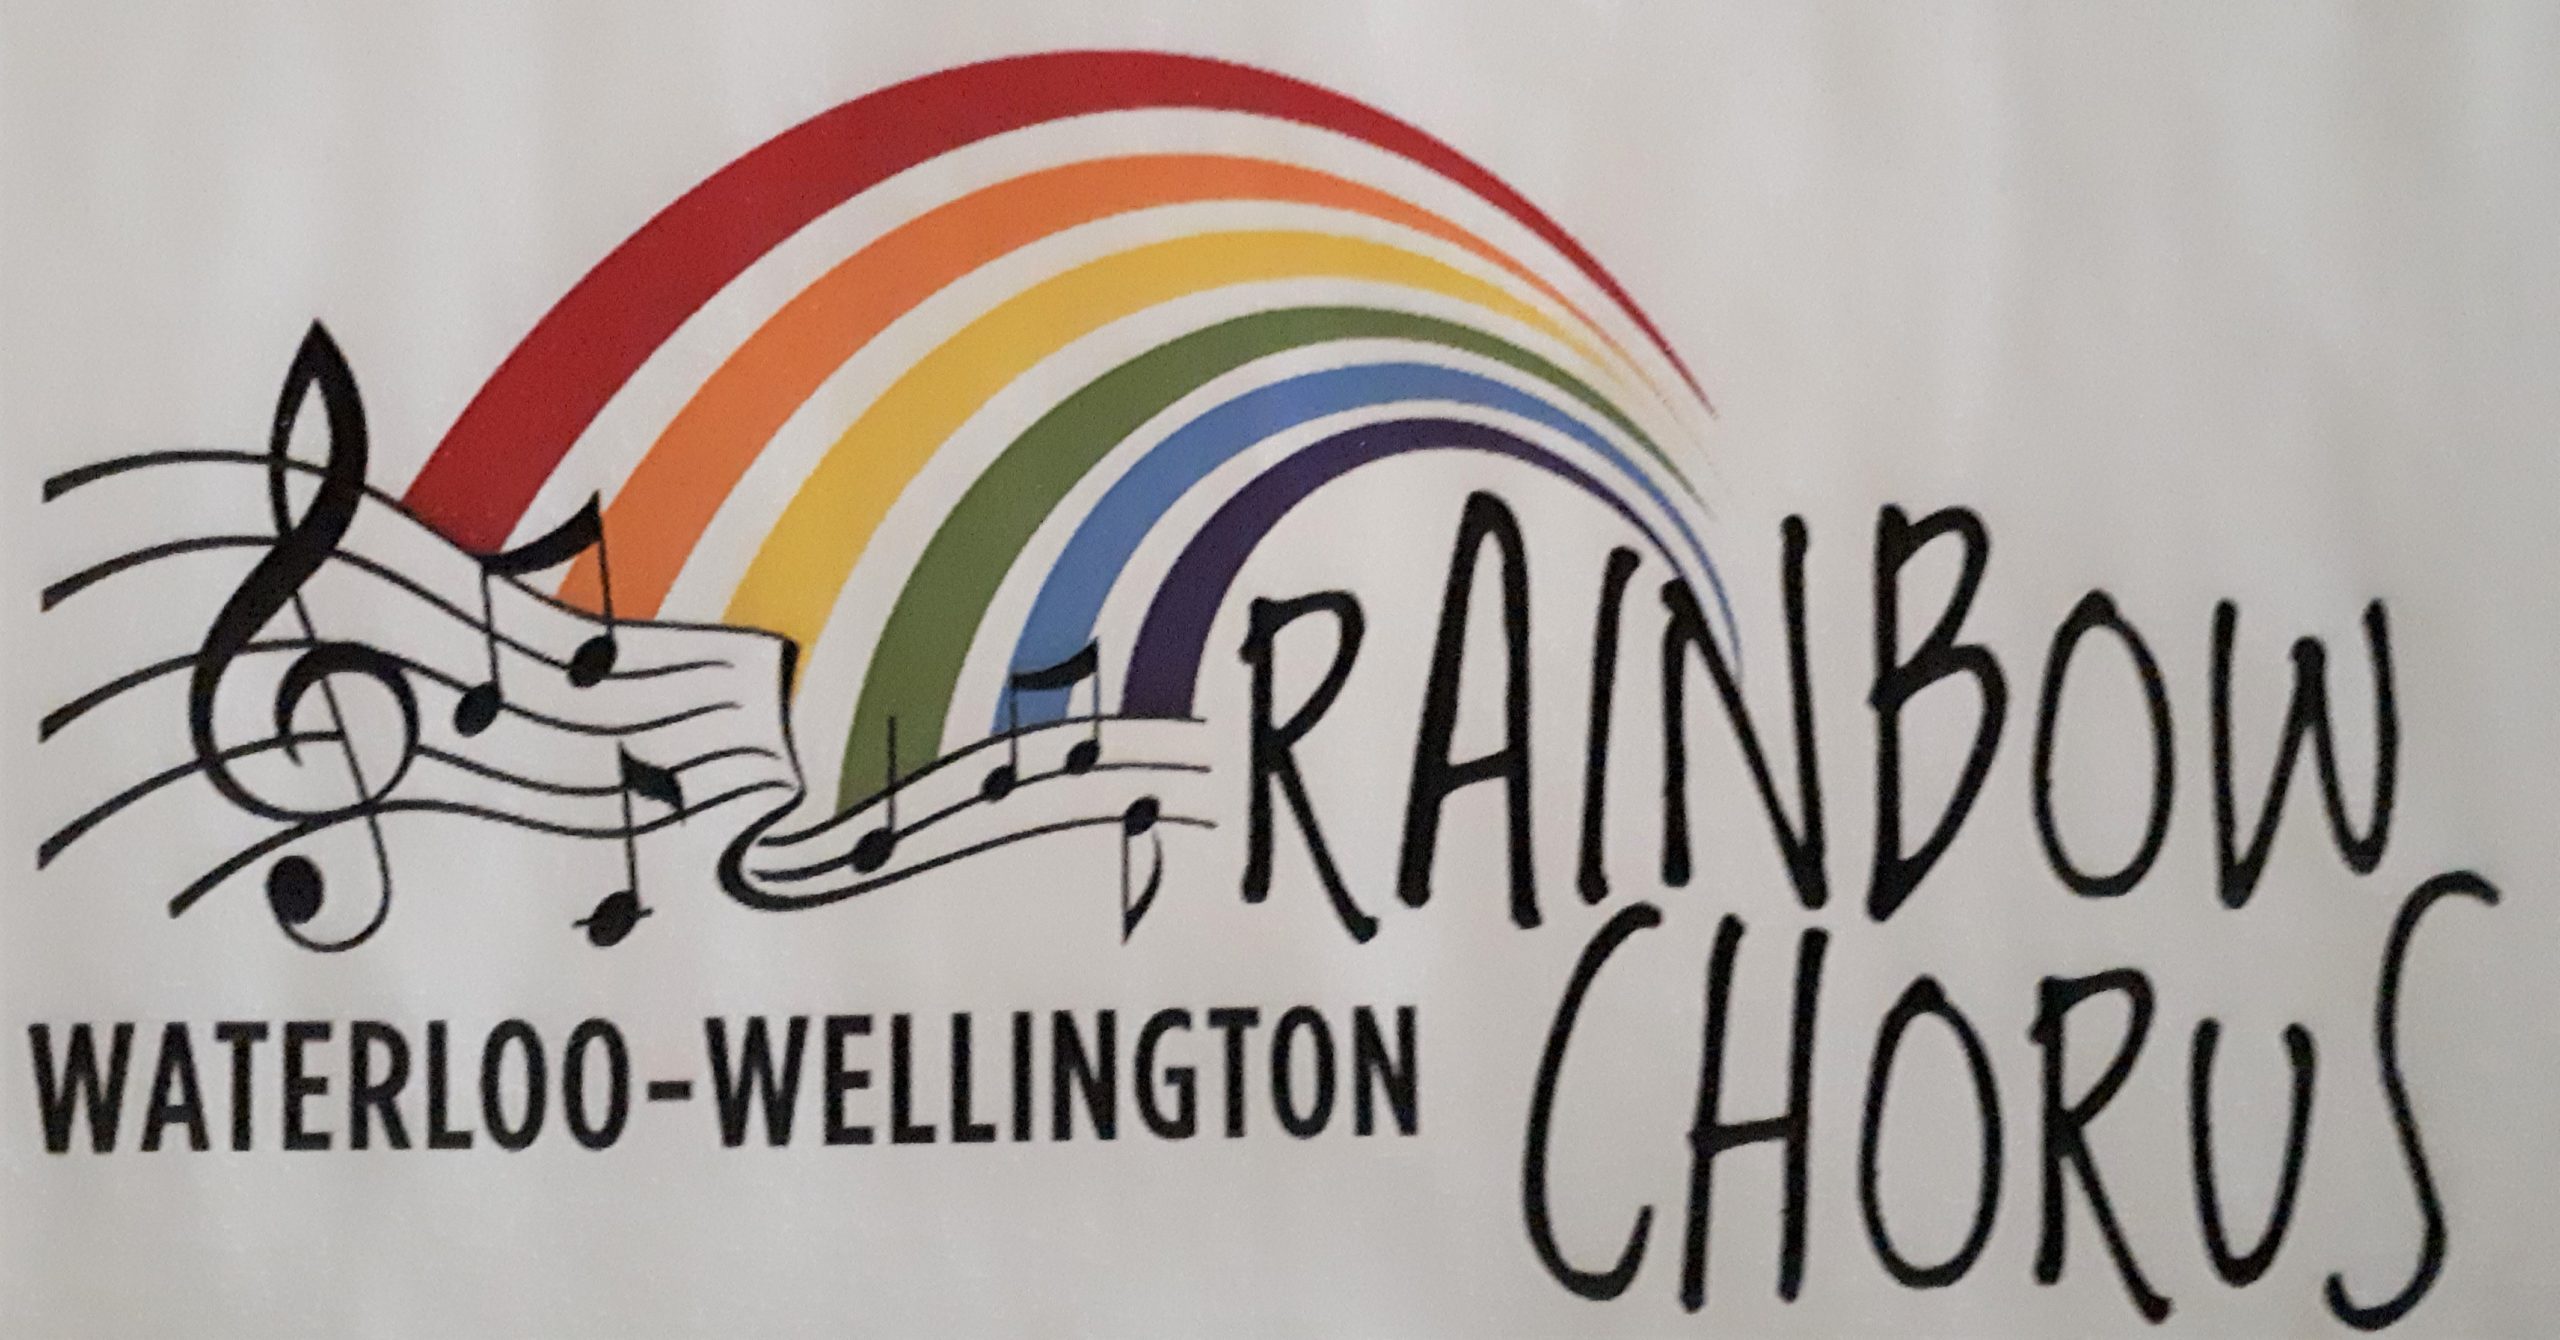 Waterloo Wellington Rainbow Chorus